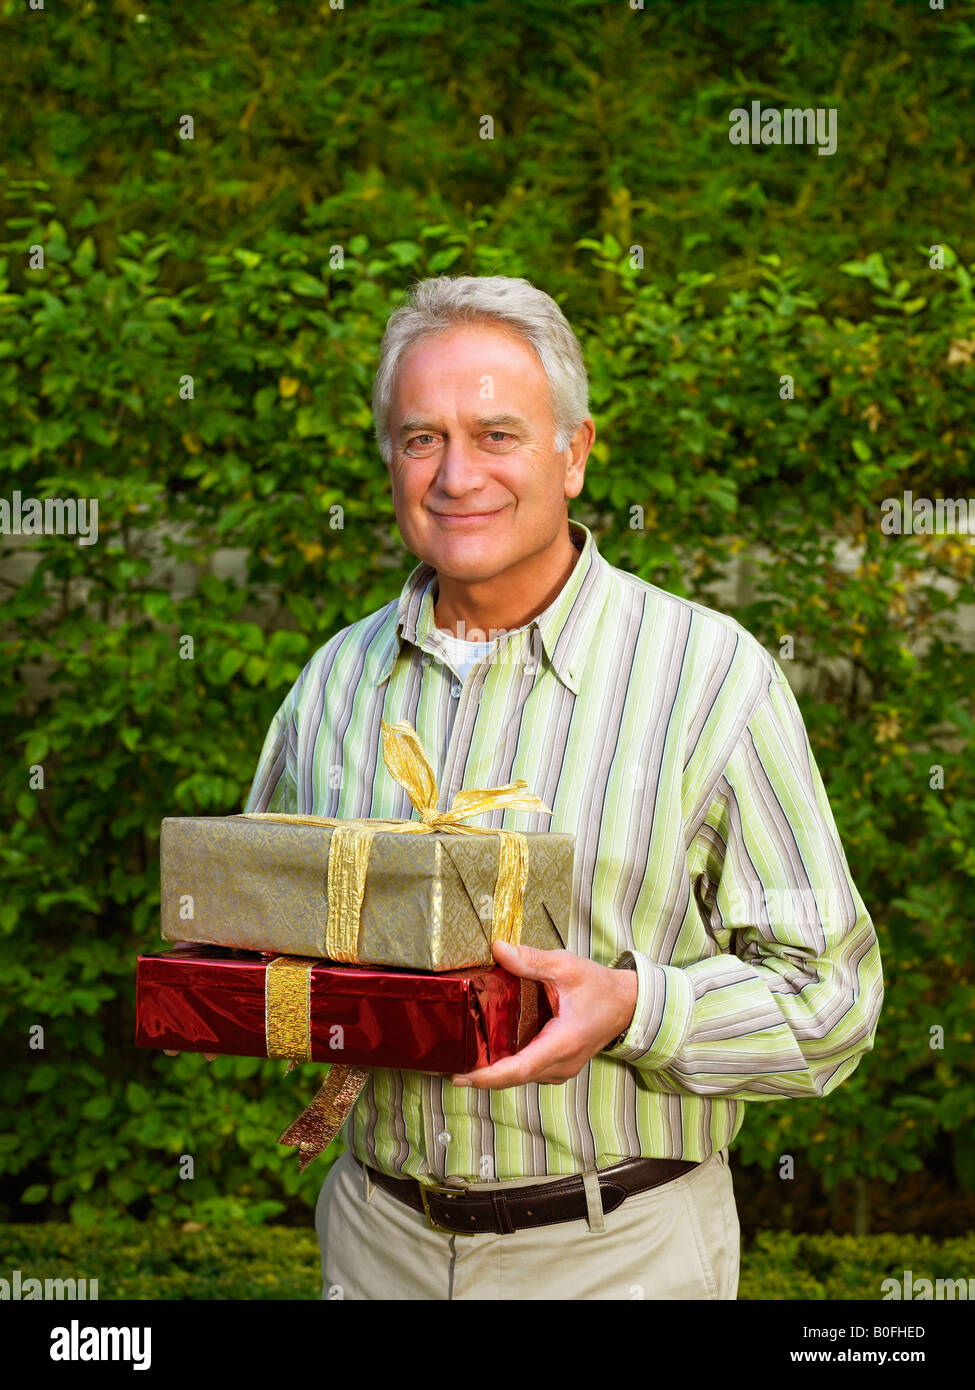 Senior man holding presents Banque D'Images